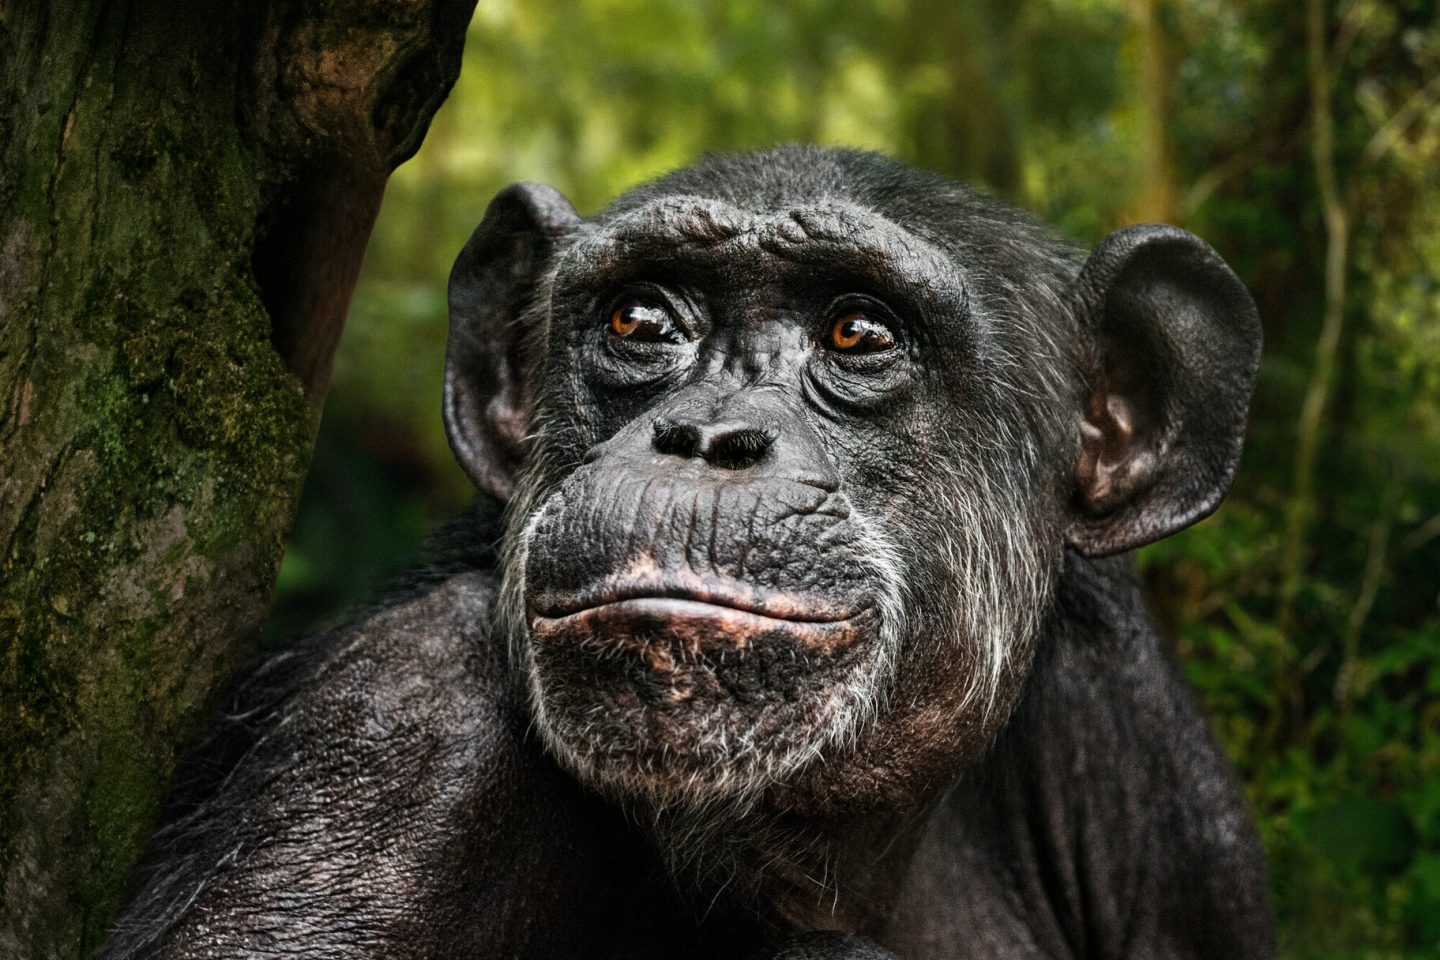 Chimpanzee portrait